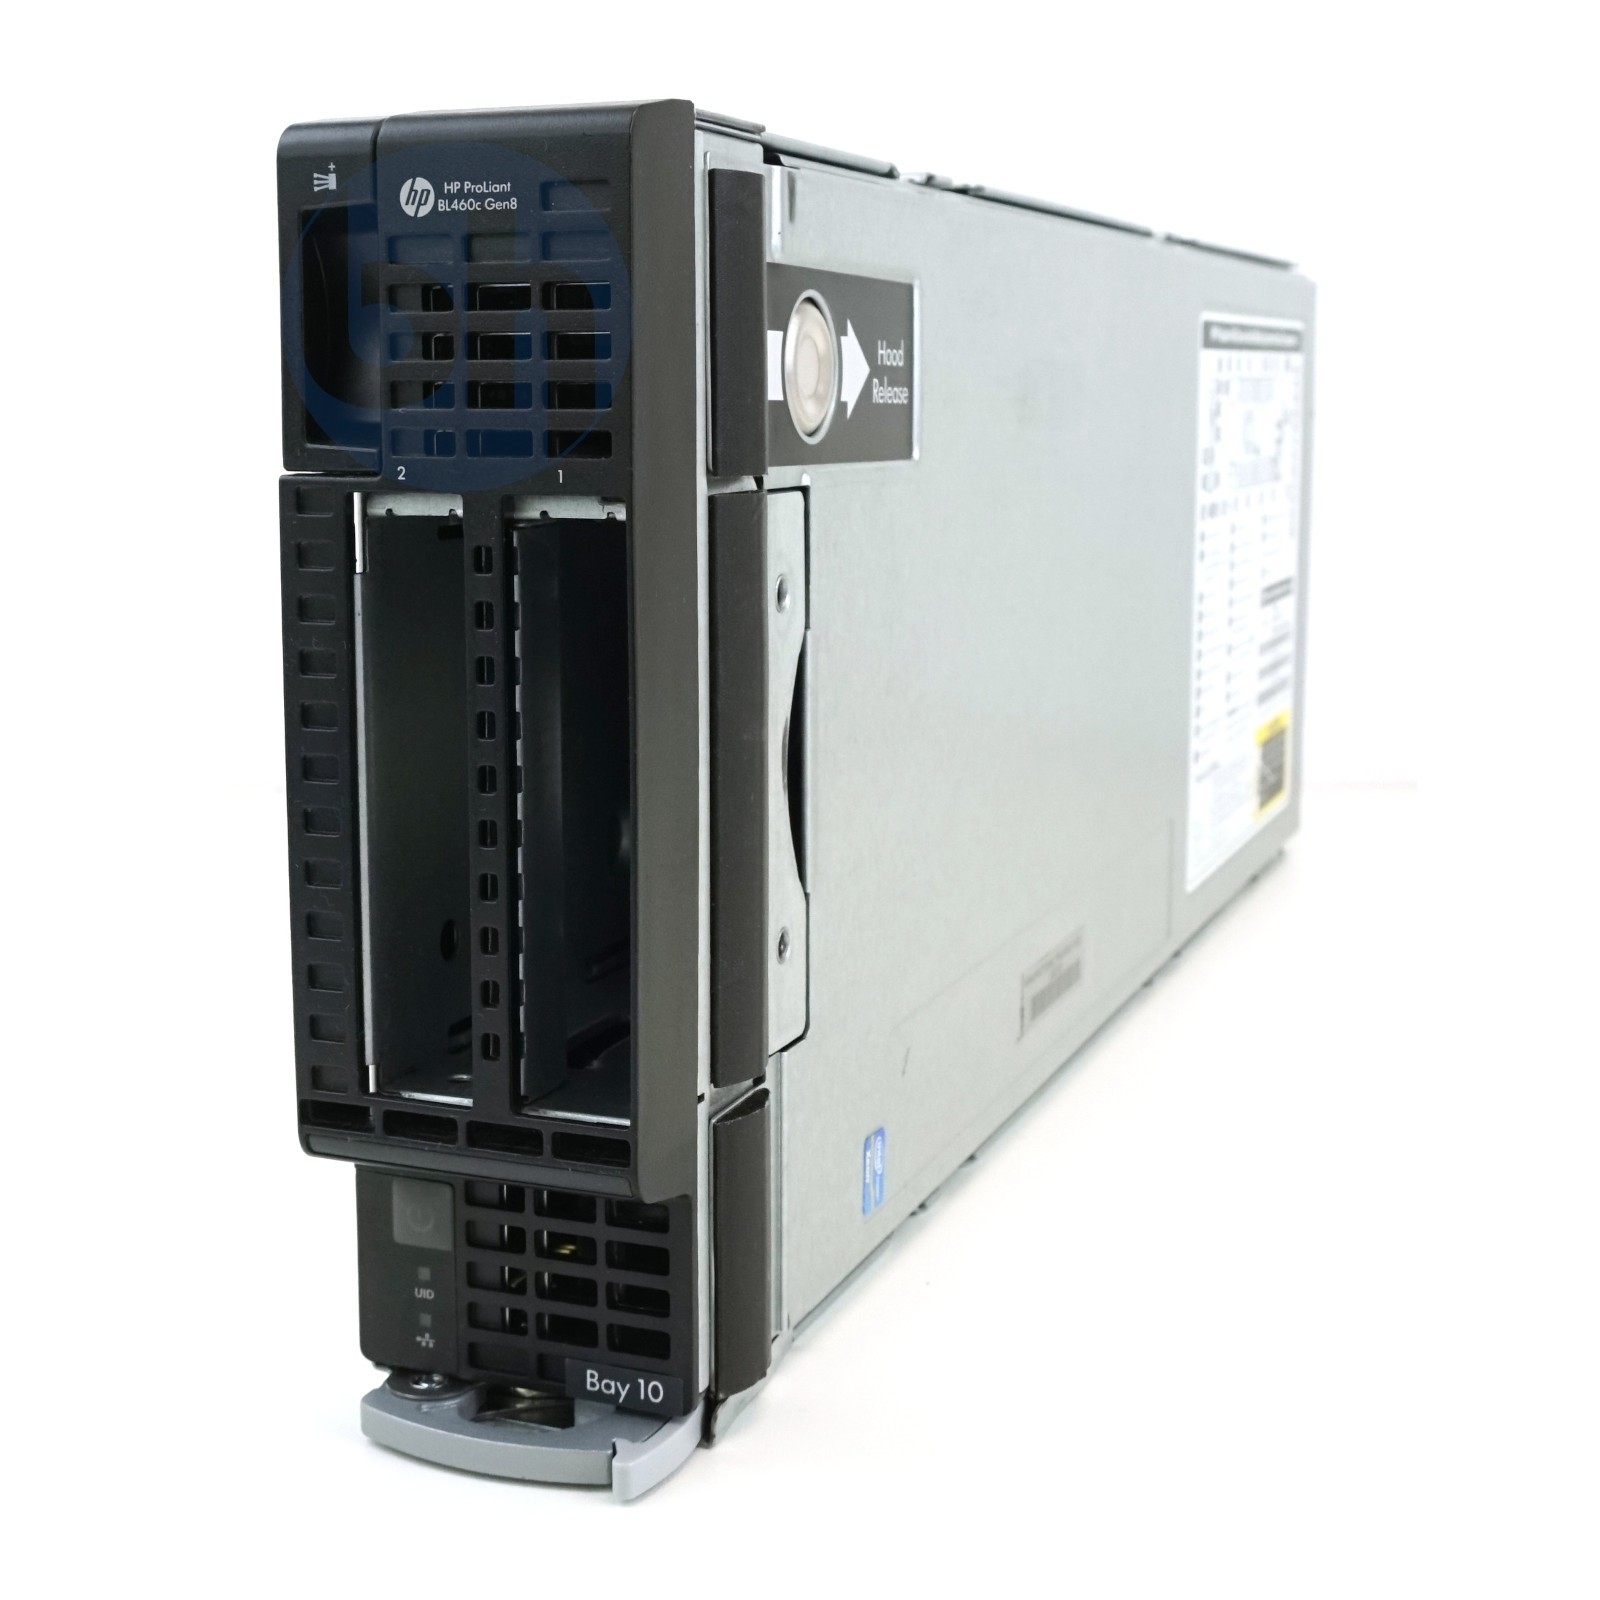 HP ProLiant BL460c G8 / Gen8 Blade Server - Fully Configurable HPE CTO Node